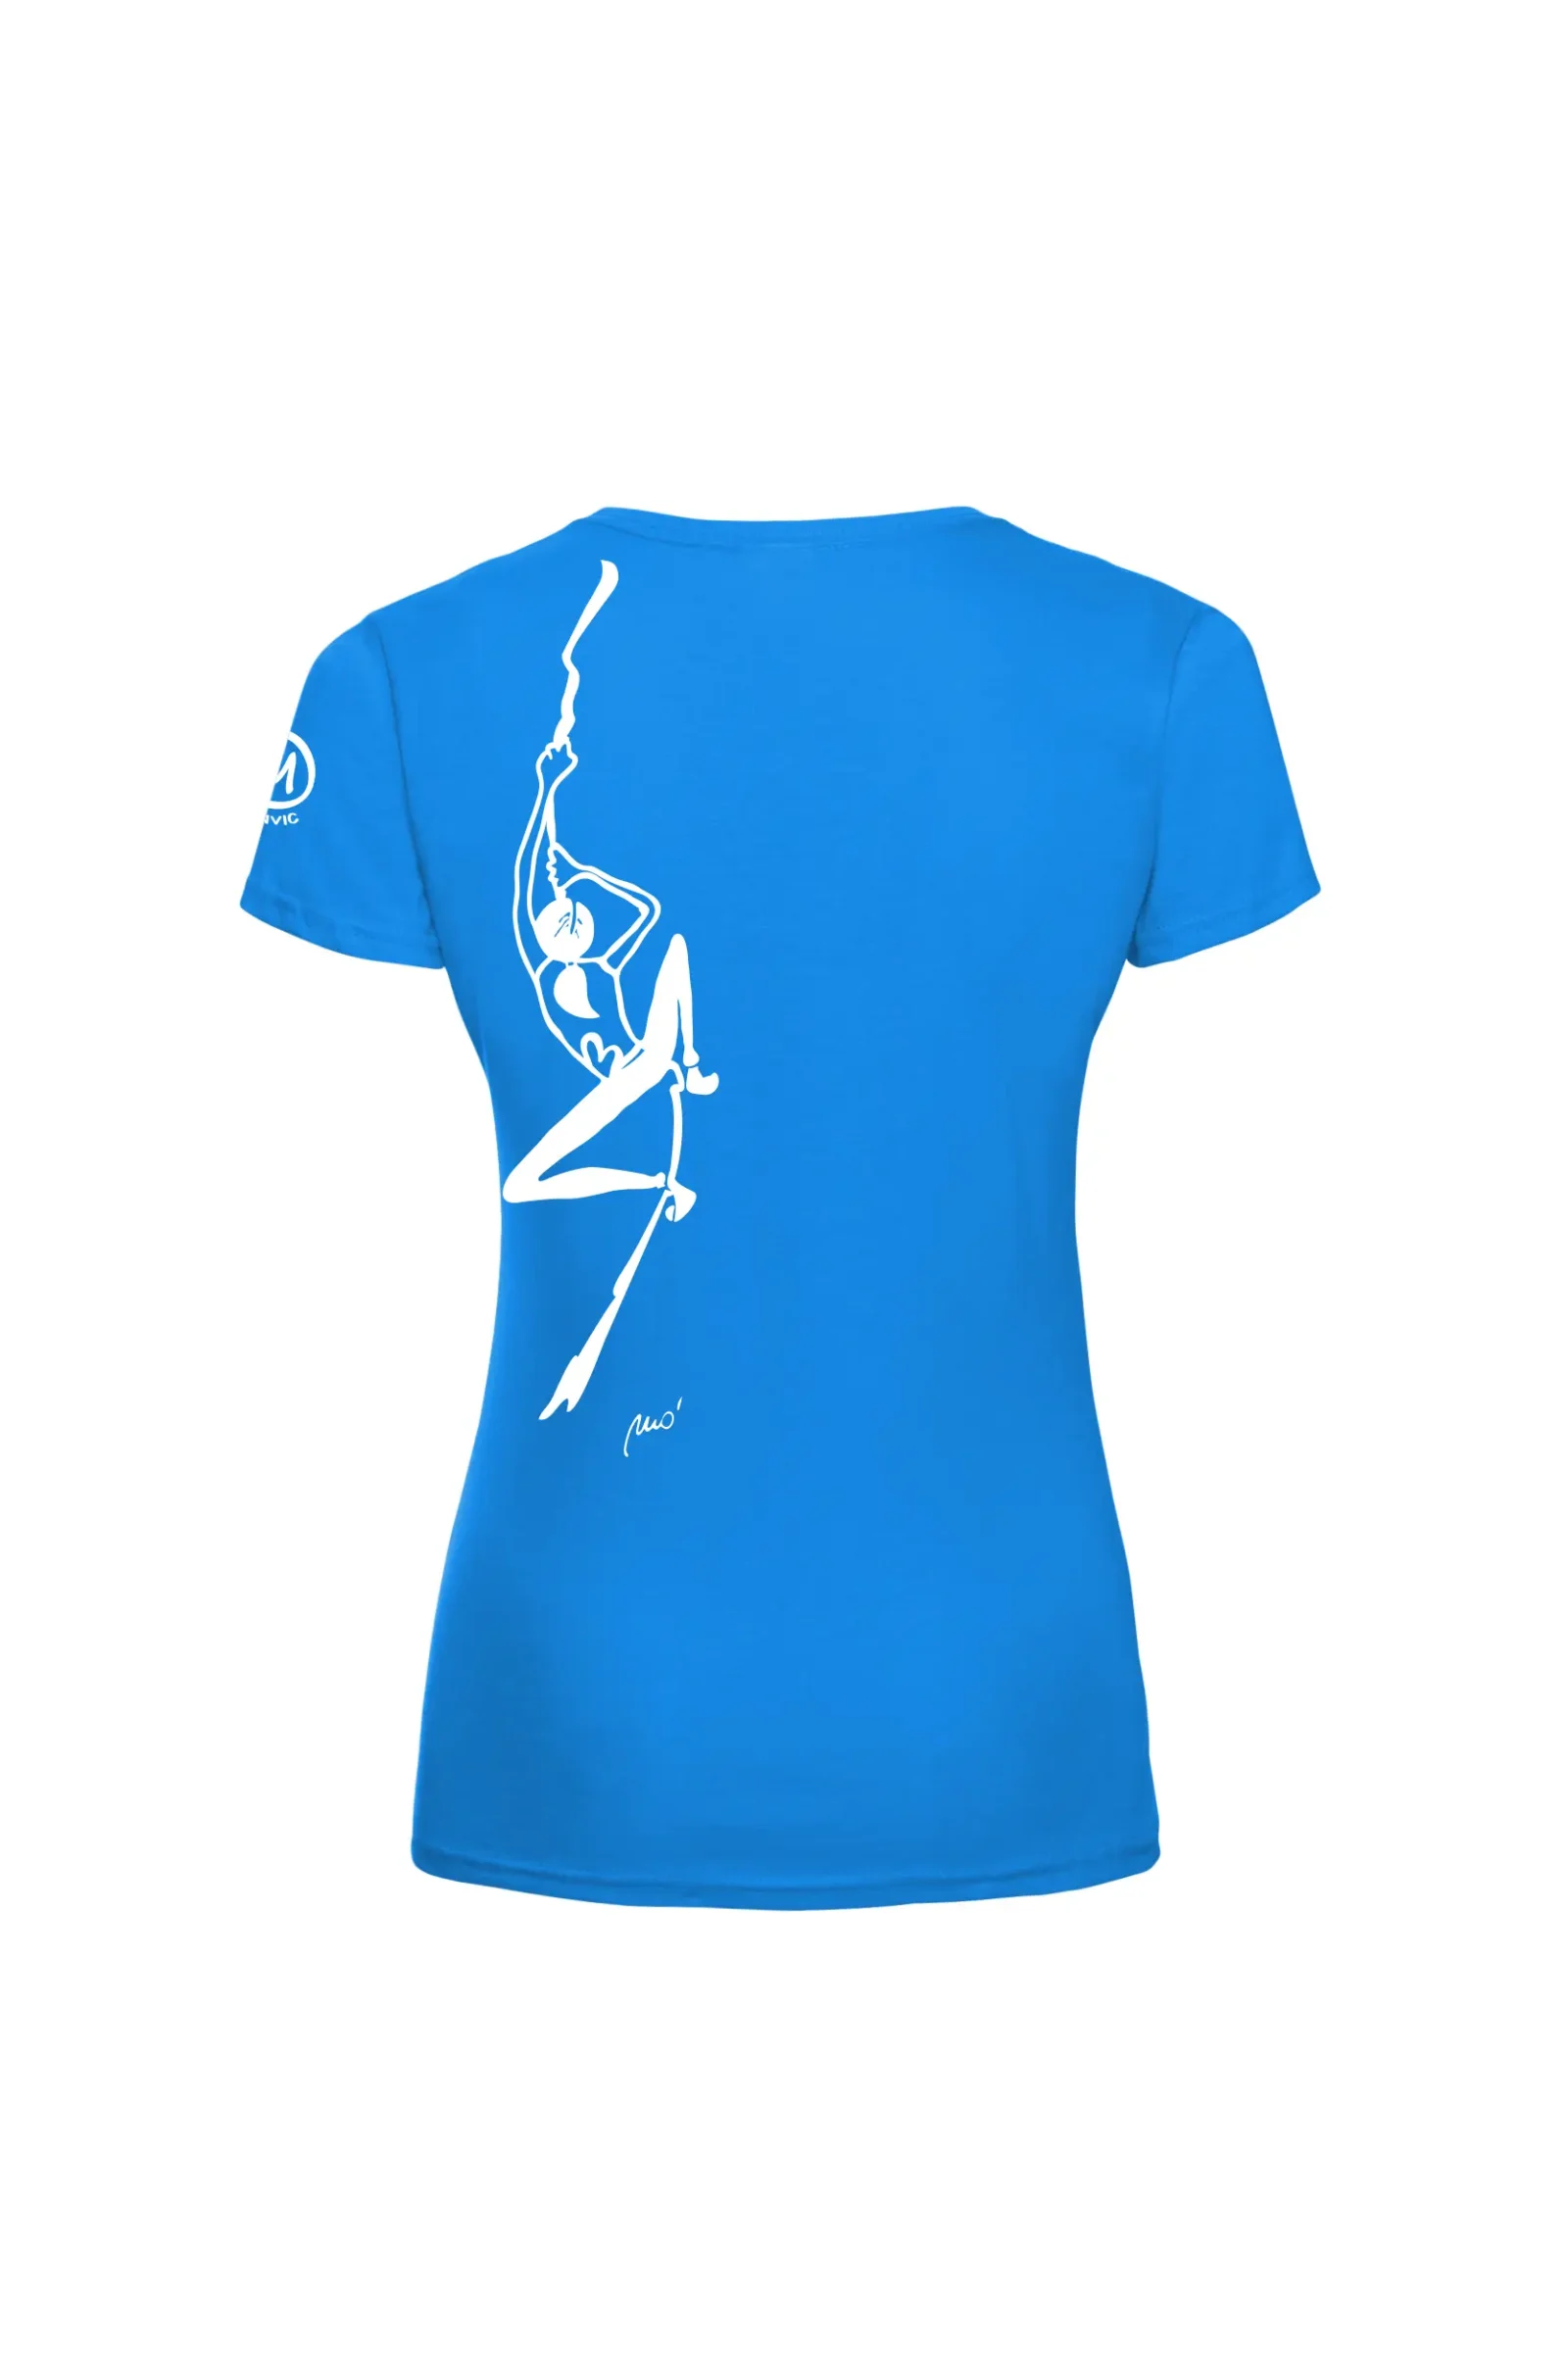 T-shirt escalade femme - coton bleu clair - graphisme "Sabry" - SHARON by MONVIC